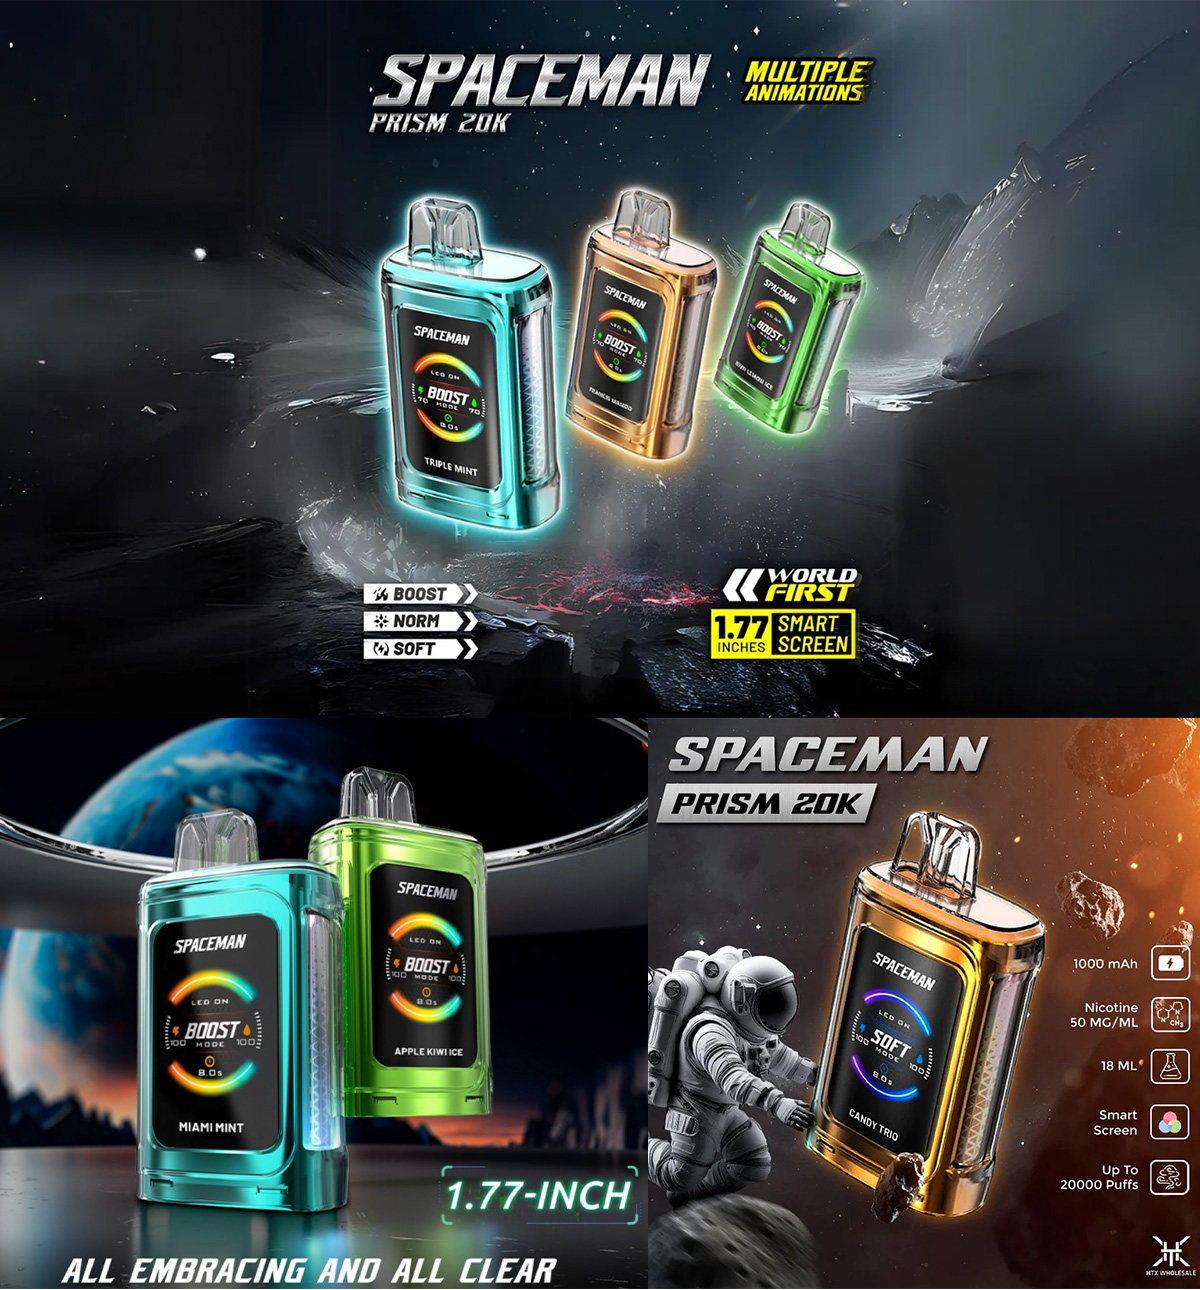 Spaceman Prism 20K hot sale